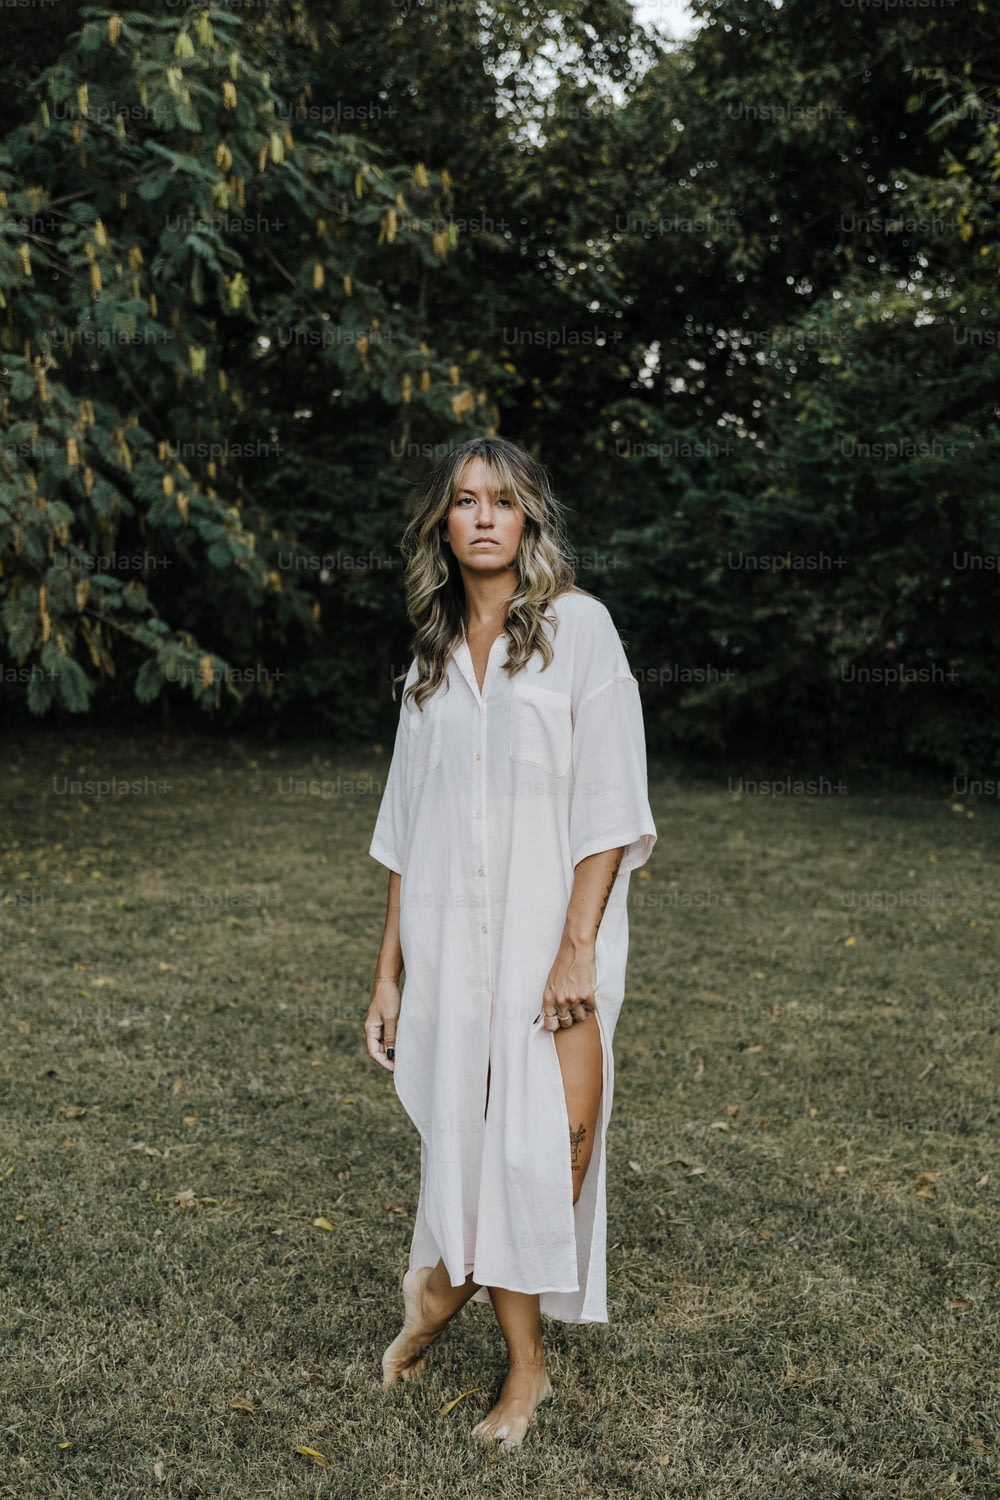 a woman standing in a field wearing a white shirt dress